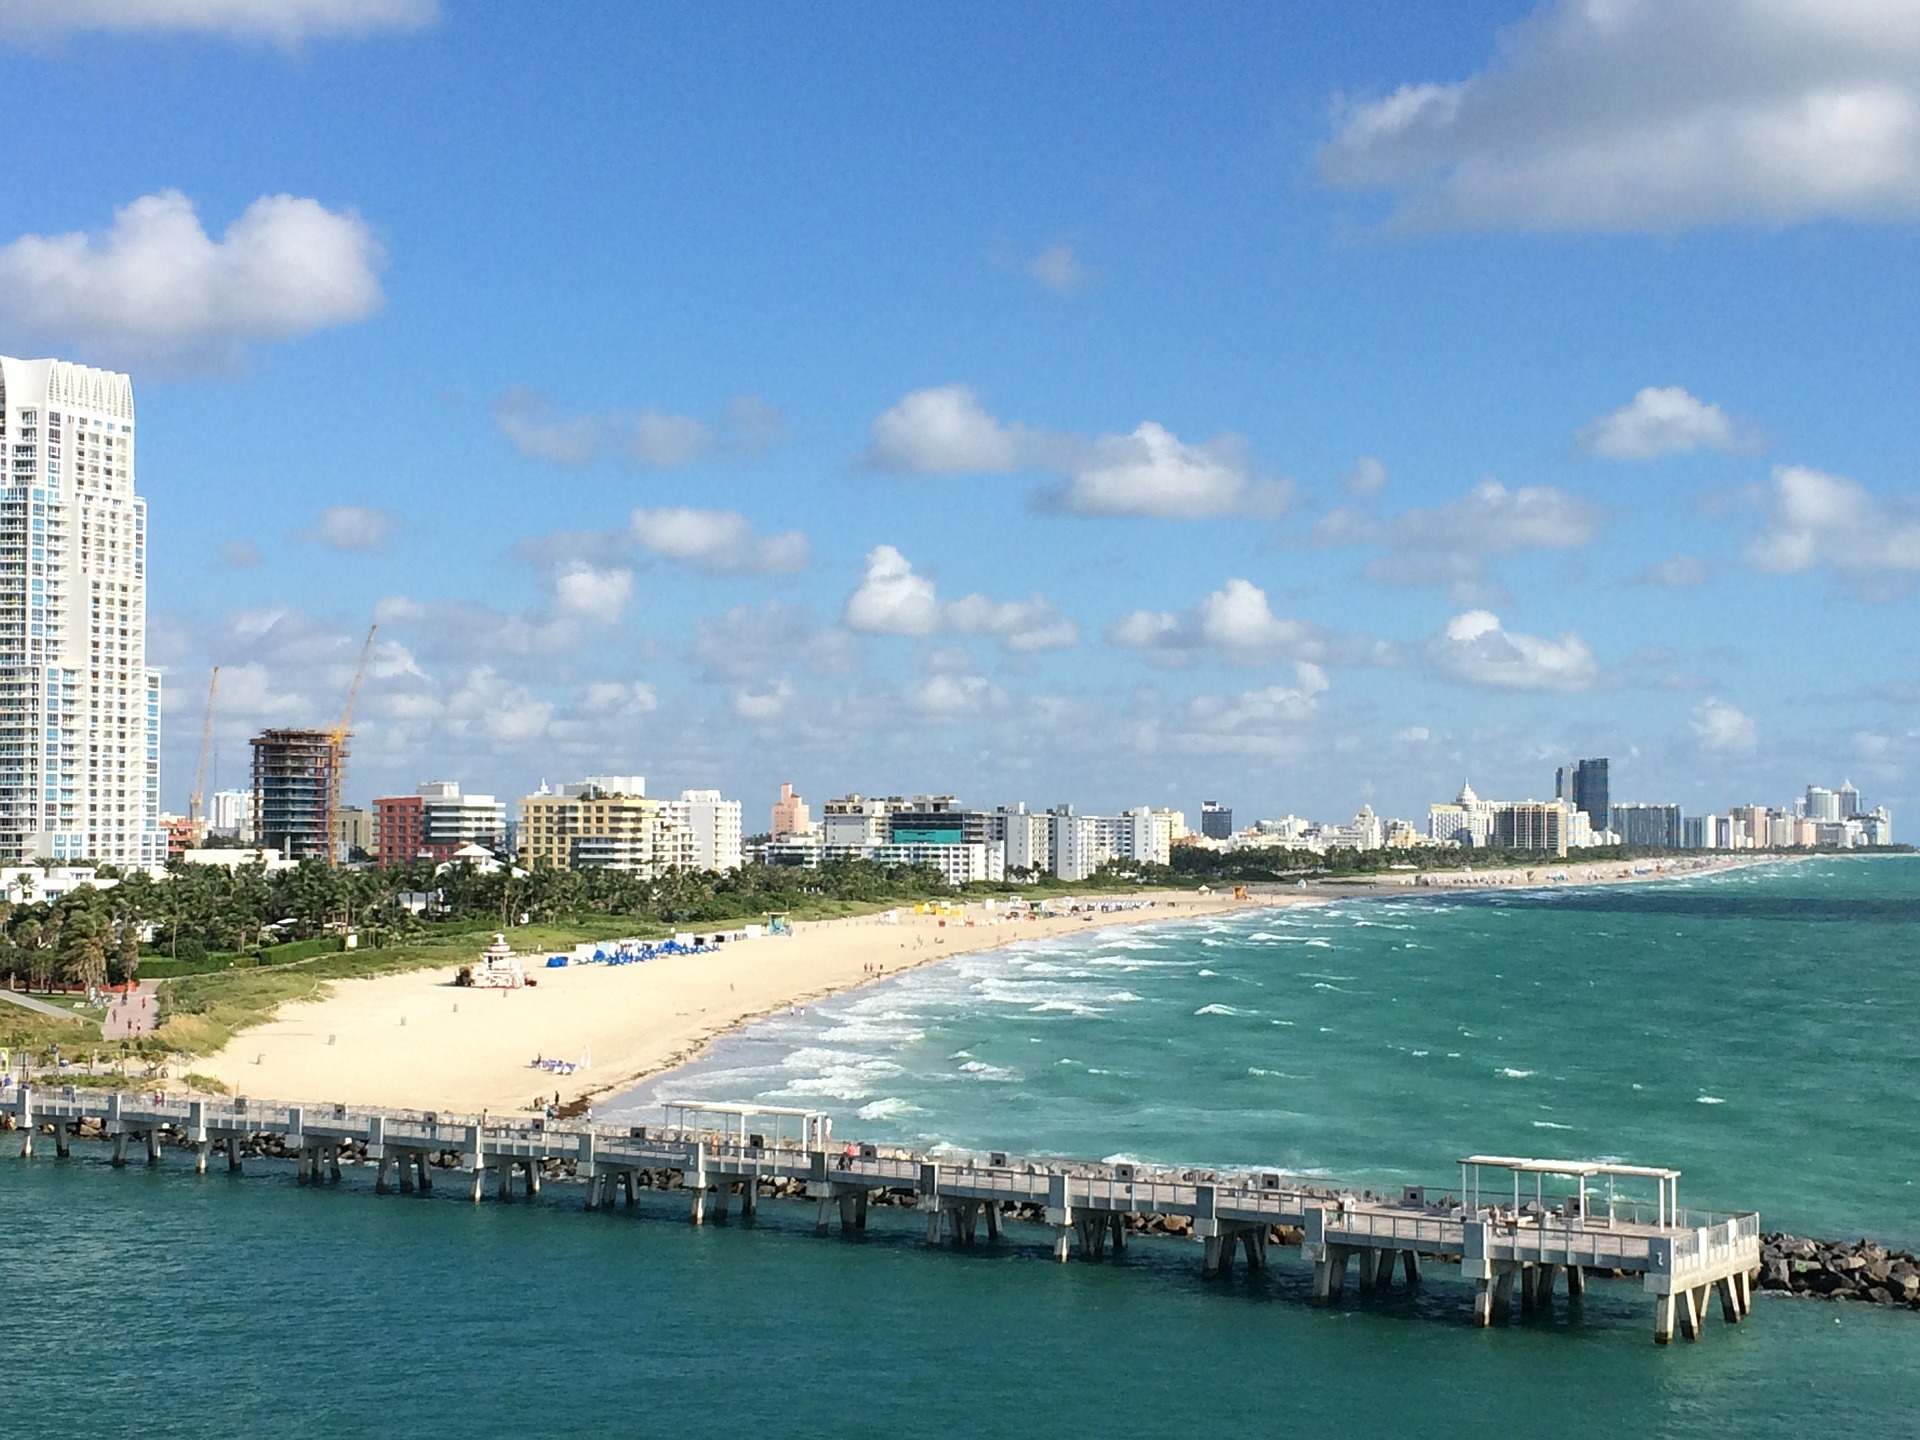 Der berühmte Miami Beach